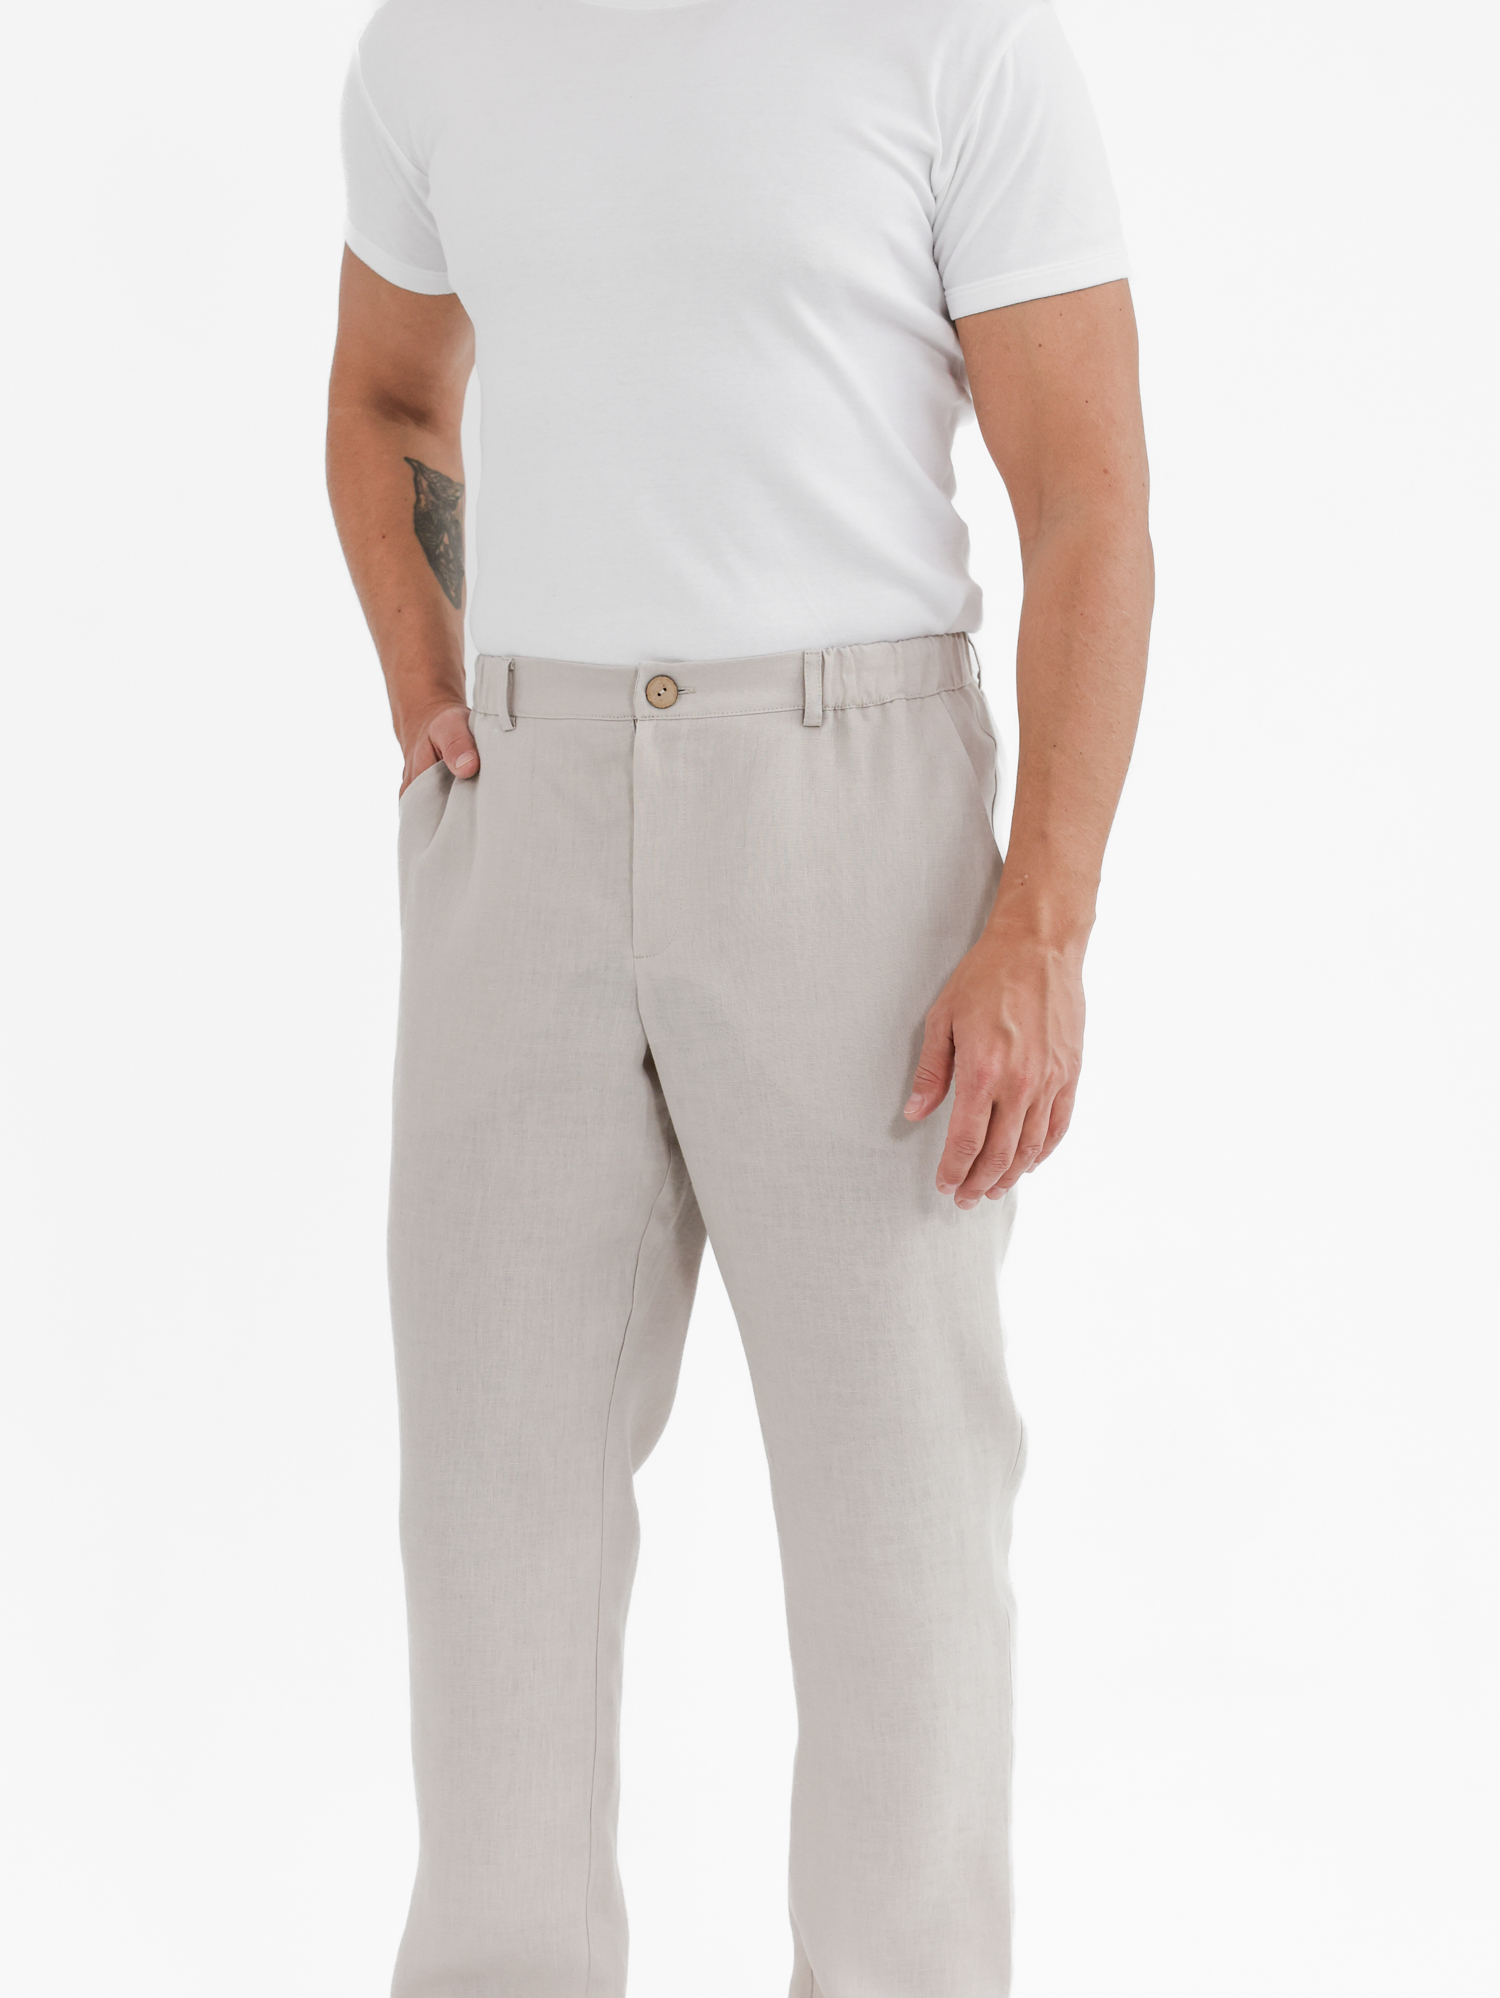 Men's linen pants for summer